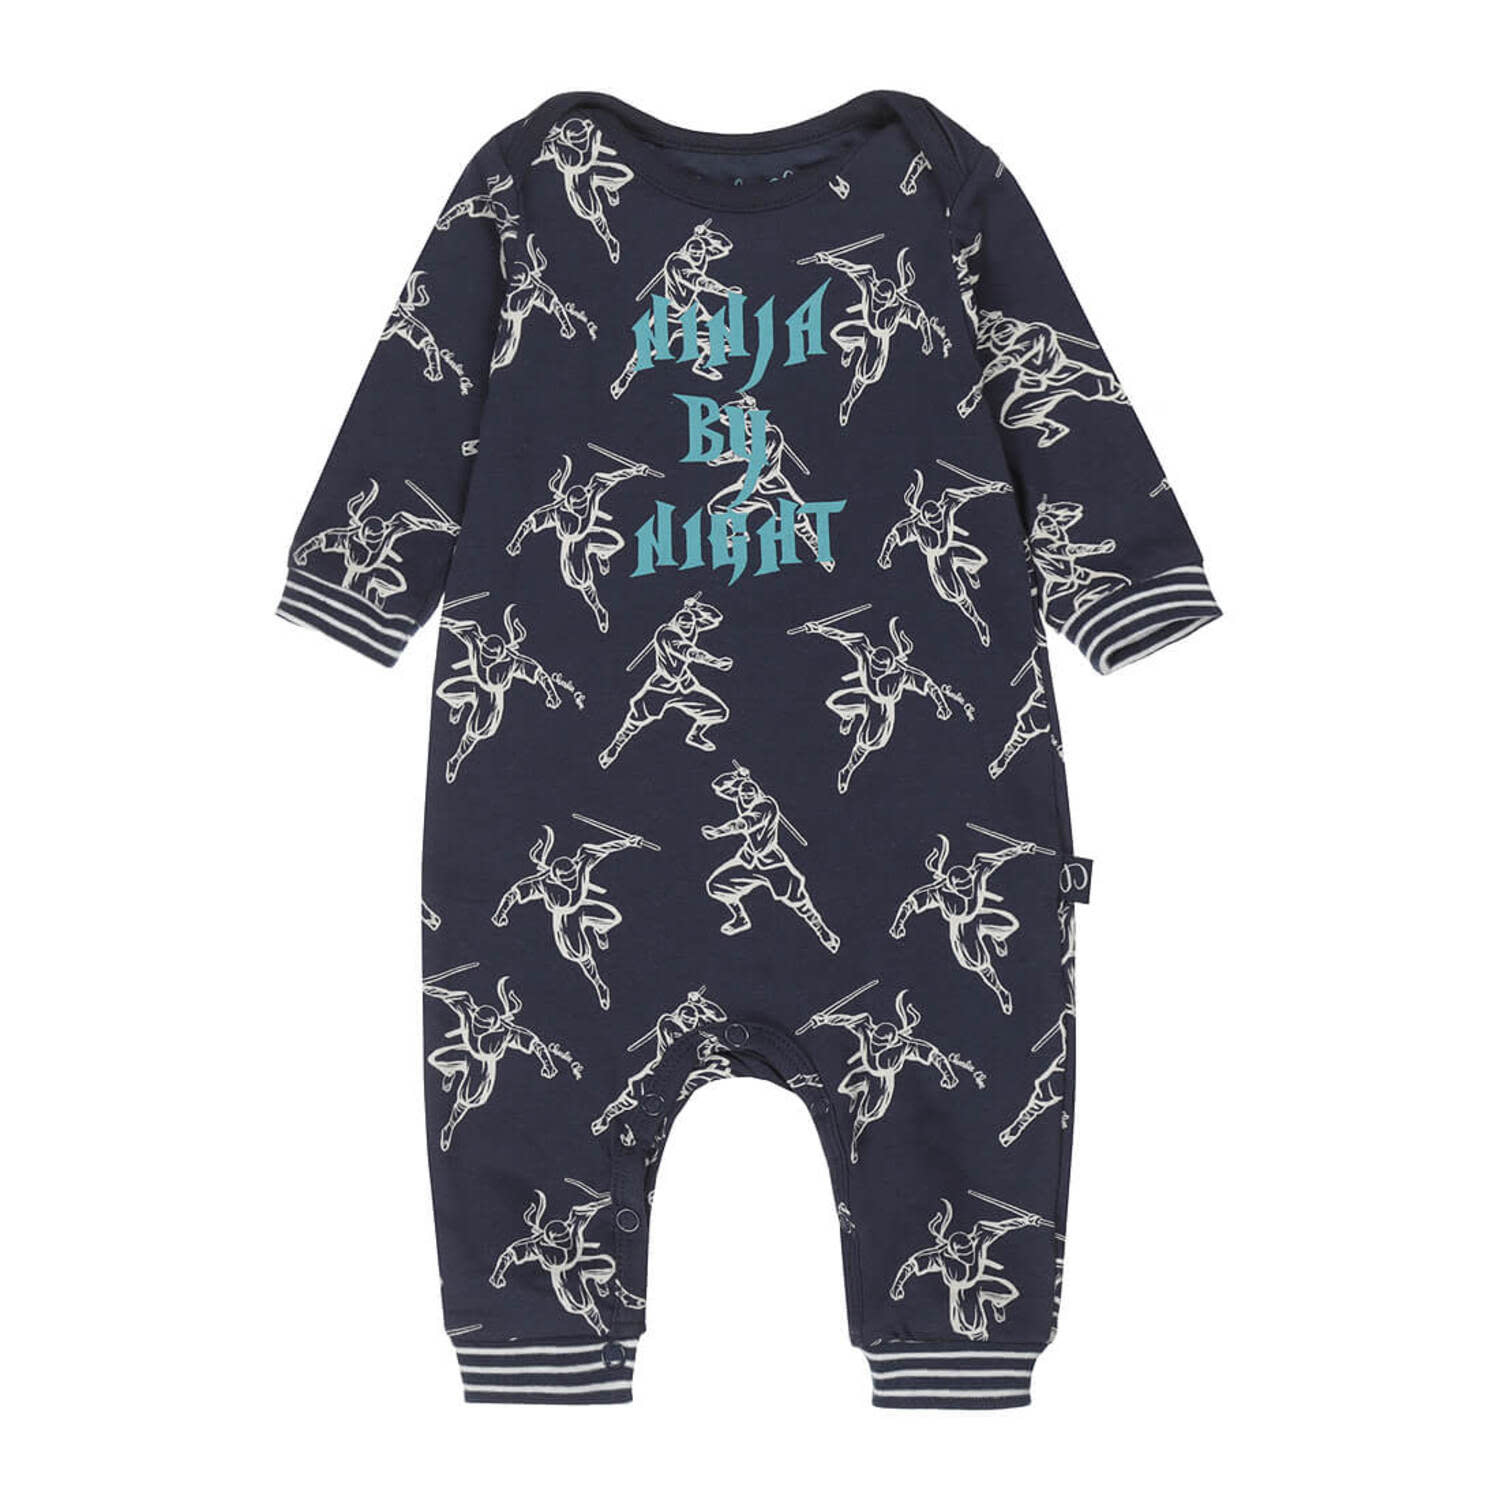 Afbeelding van Charlie Choe Baby jongens pyjama ninja by night